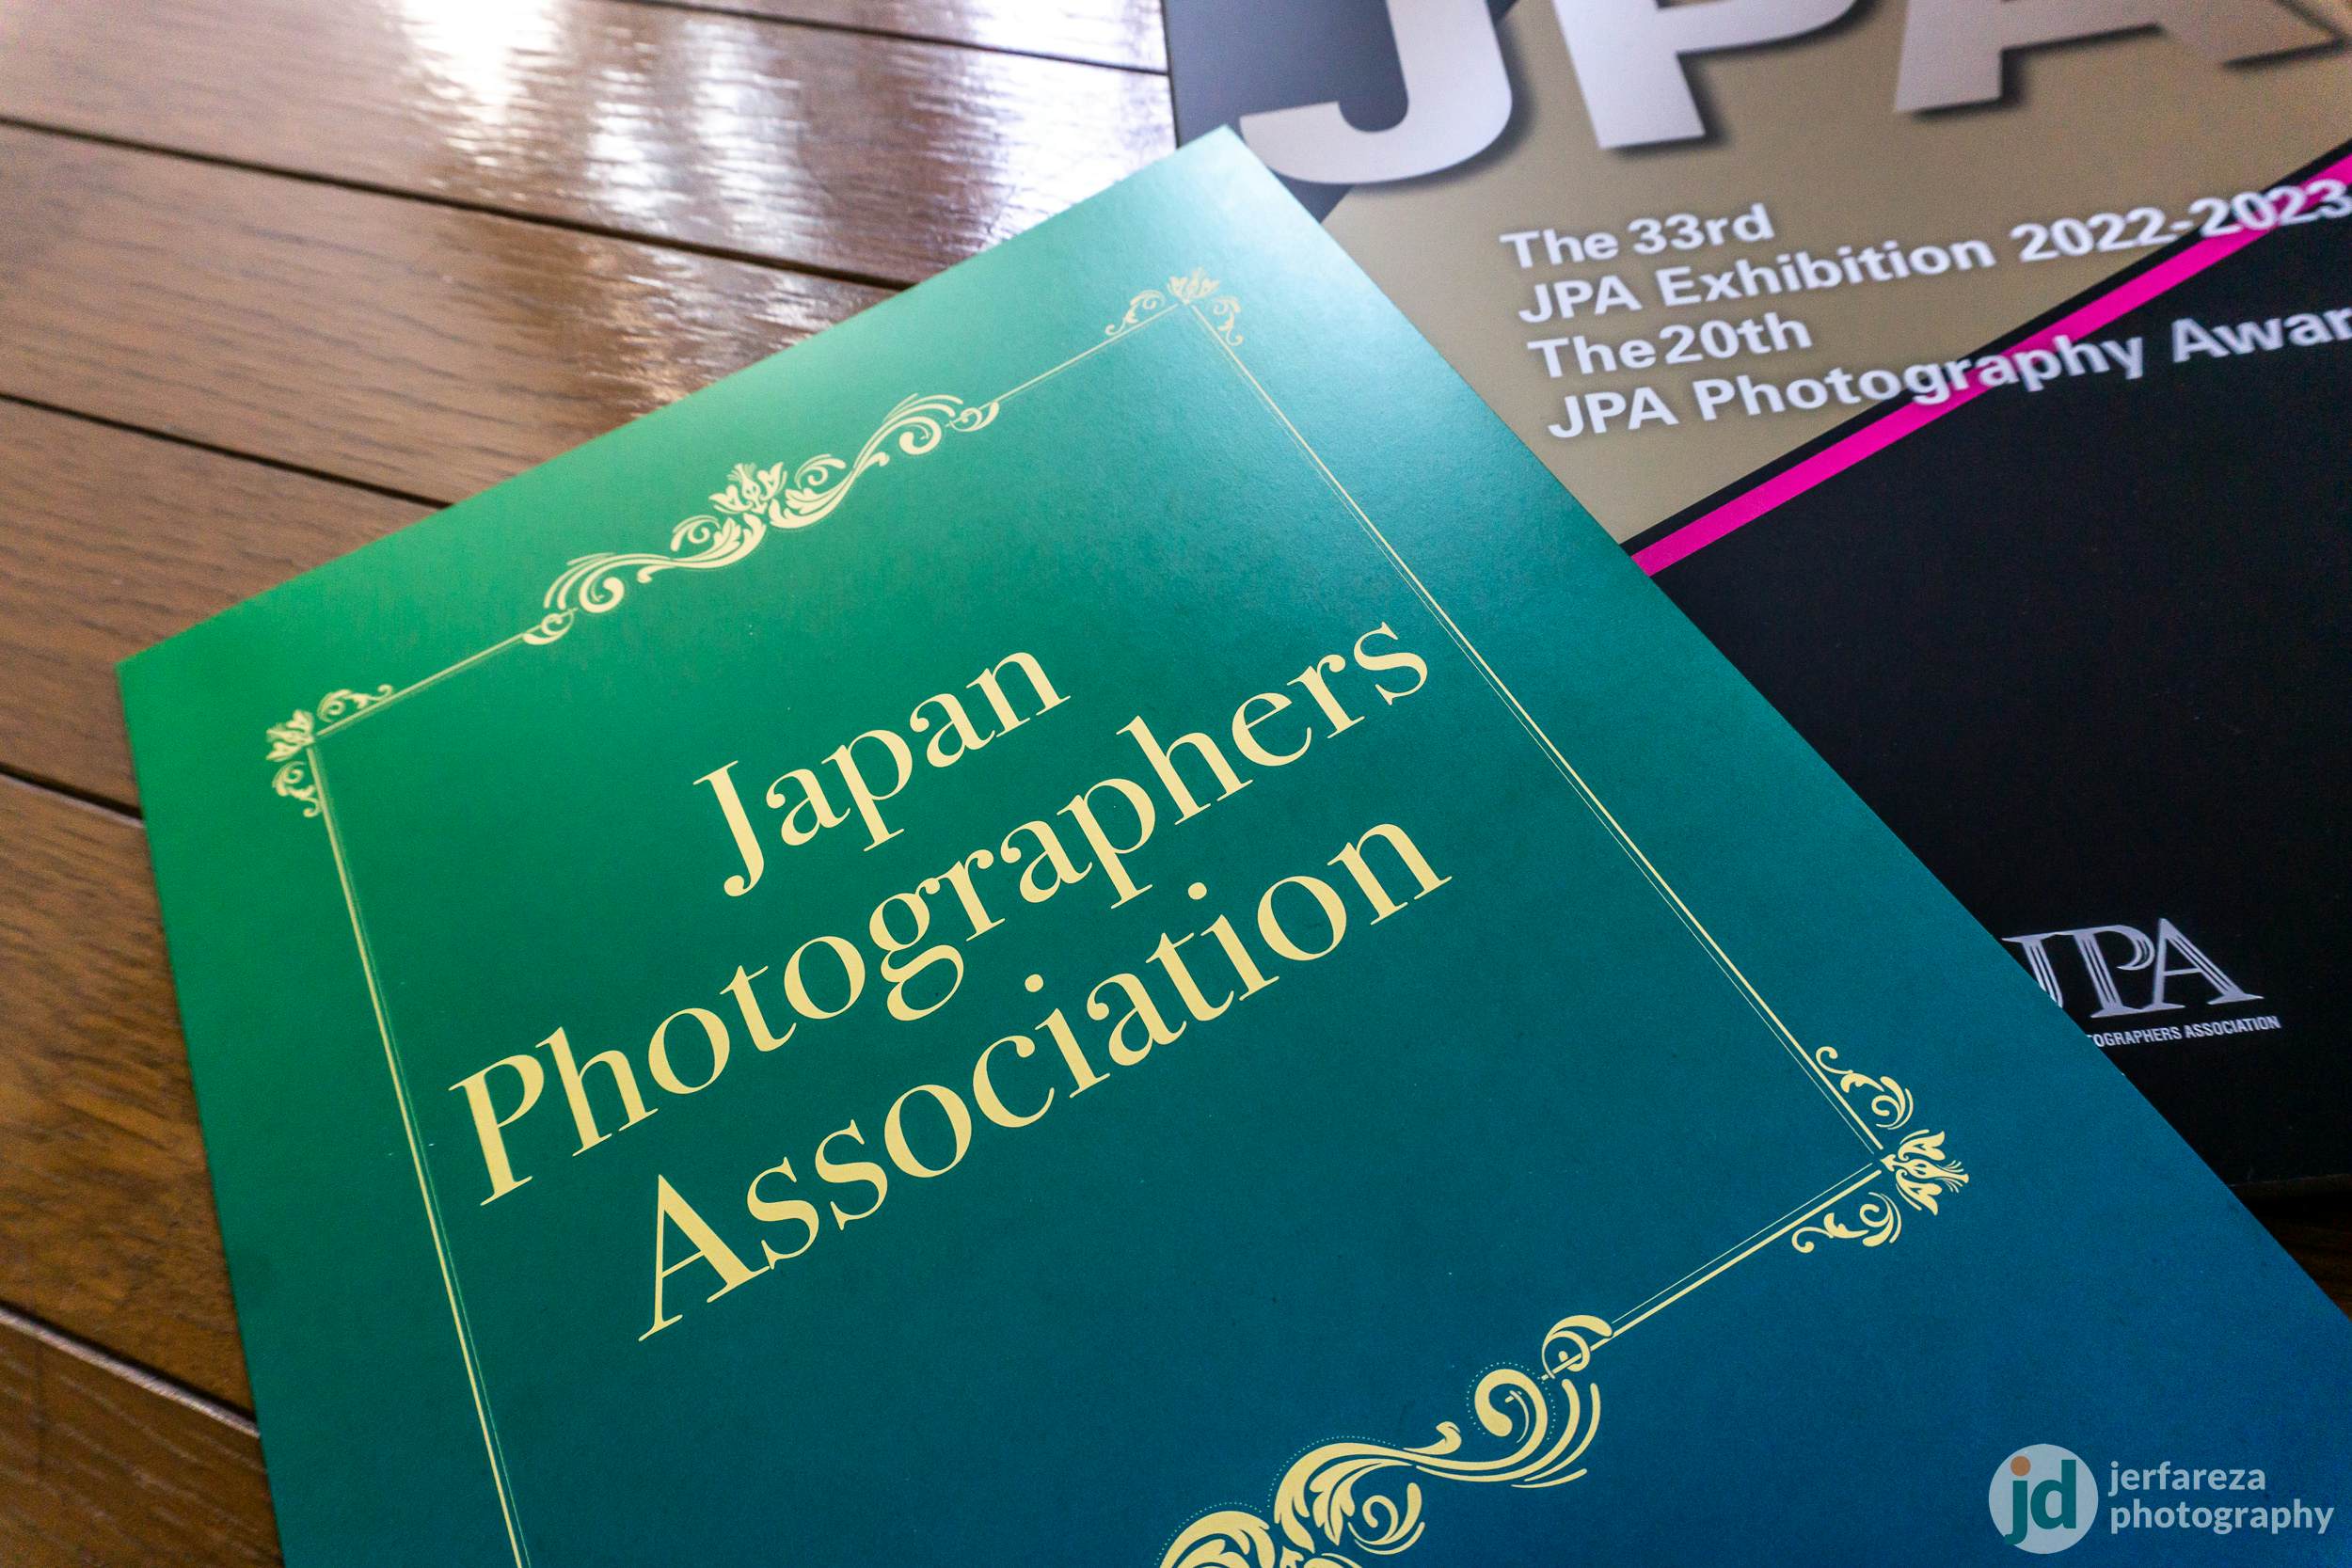 The 20th JPA Photography Awards